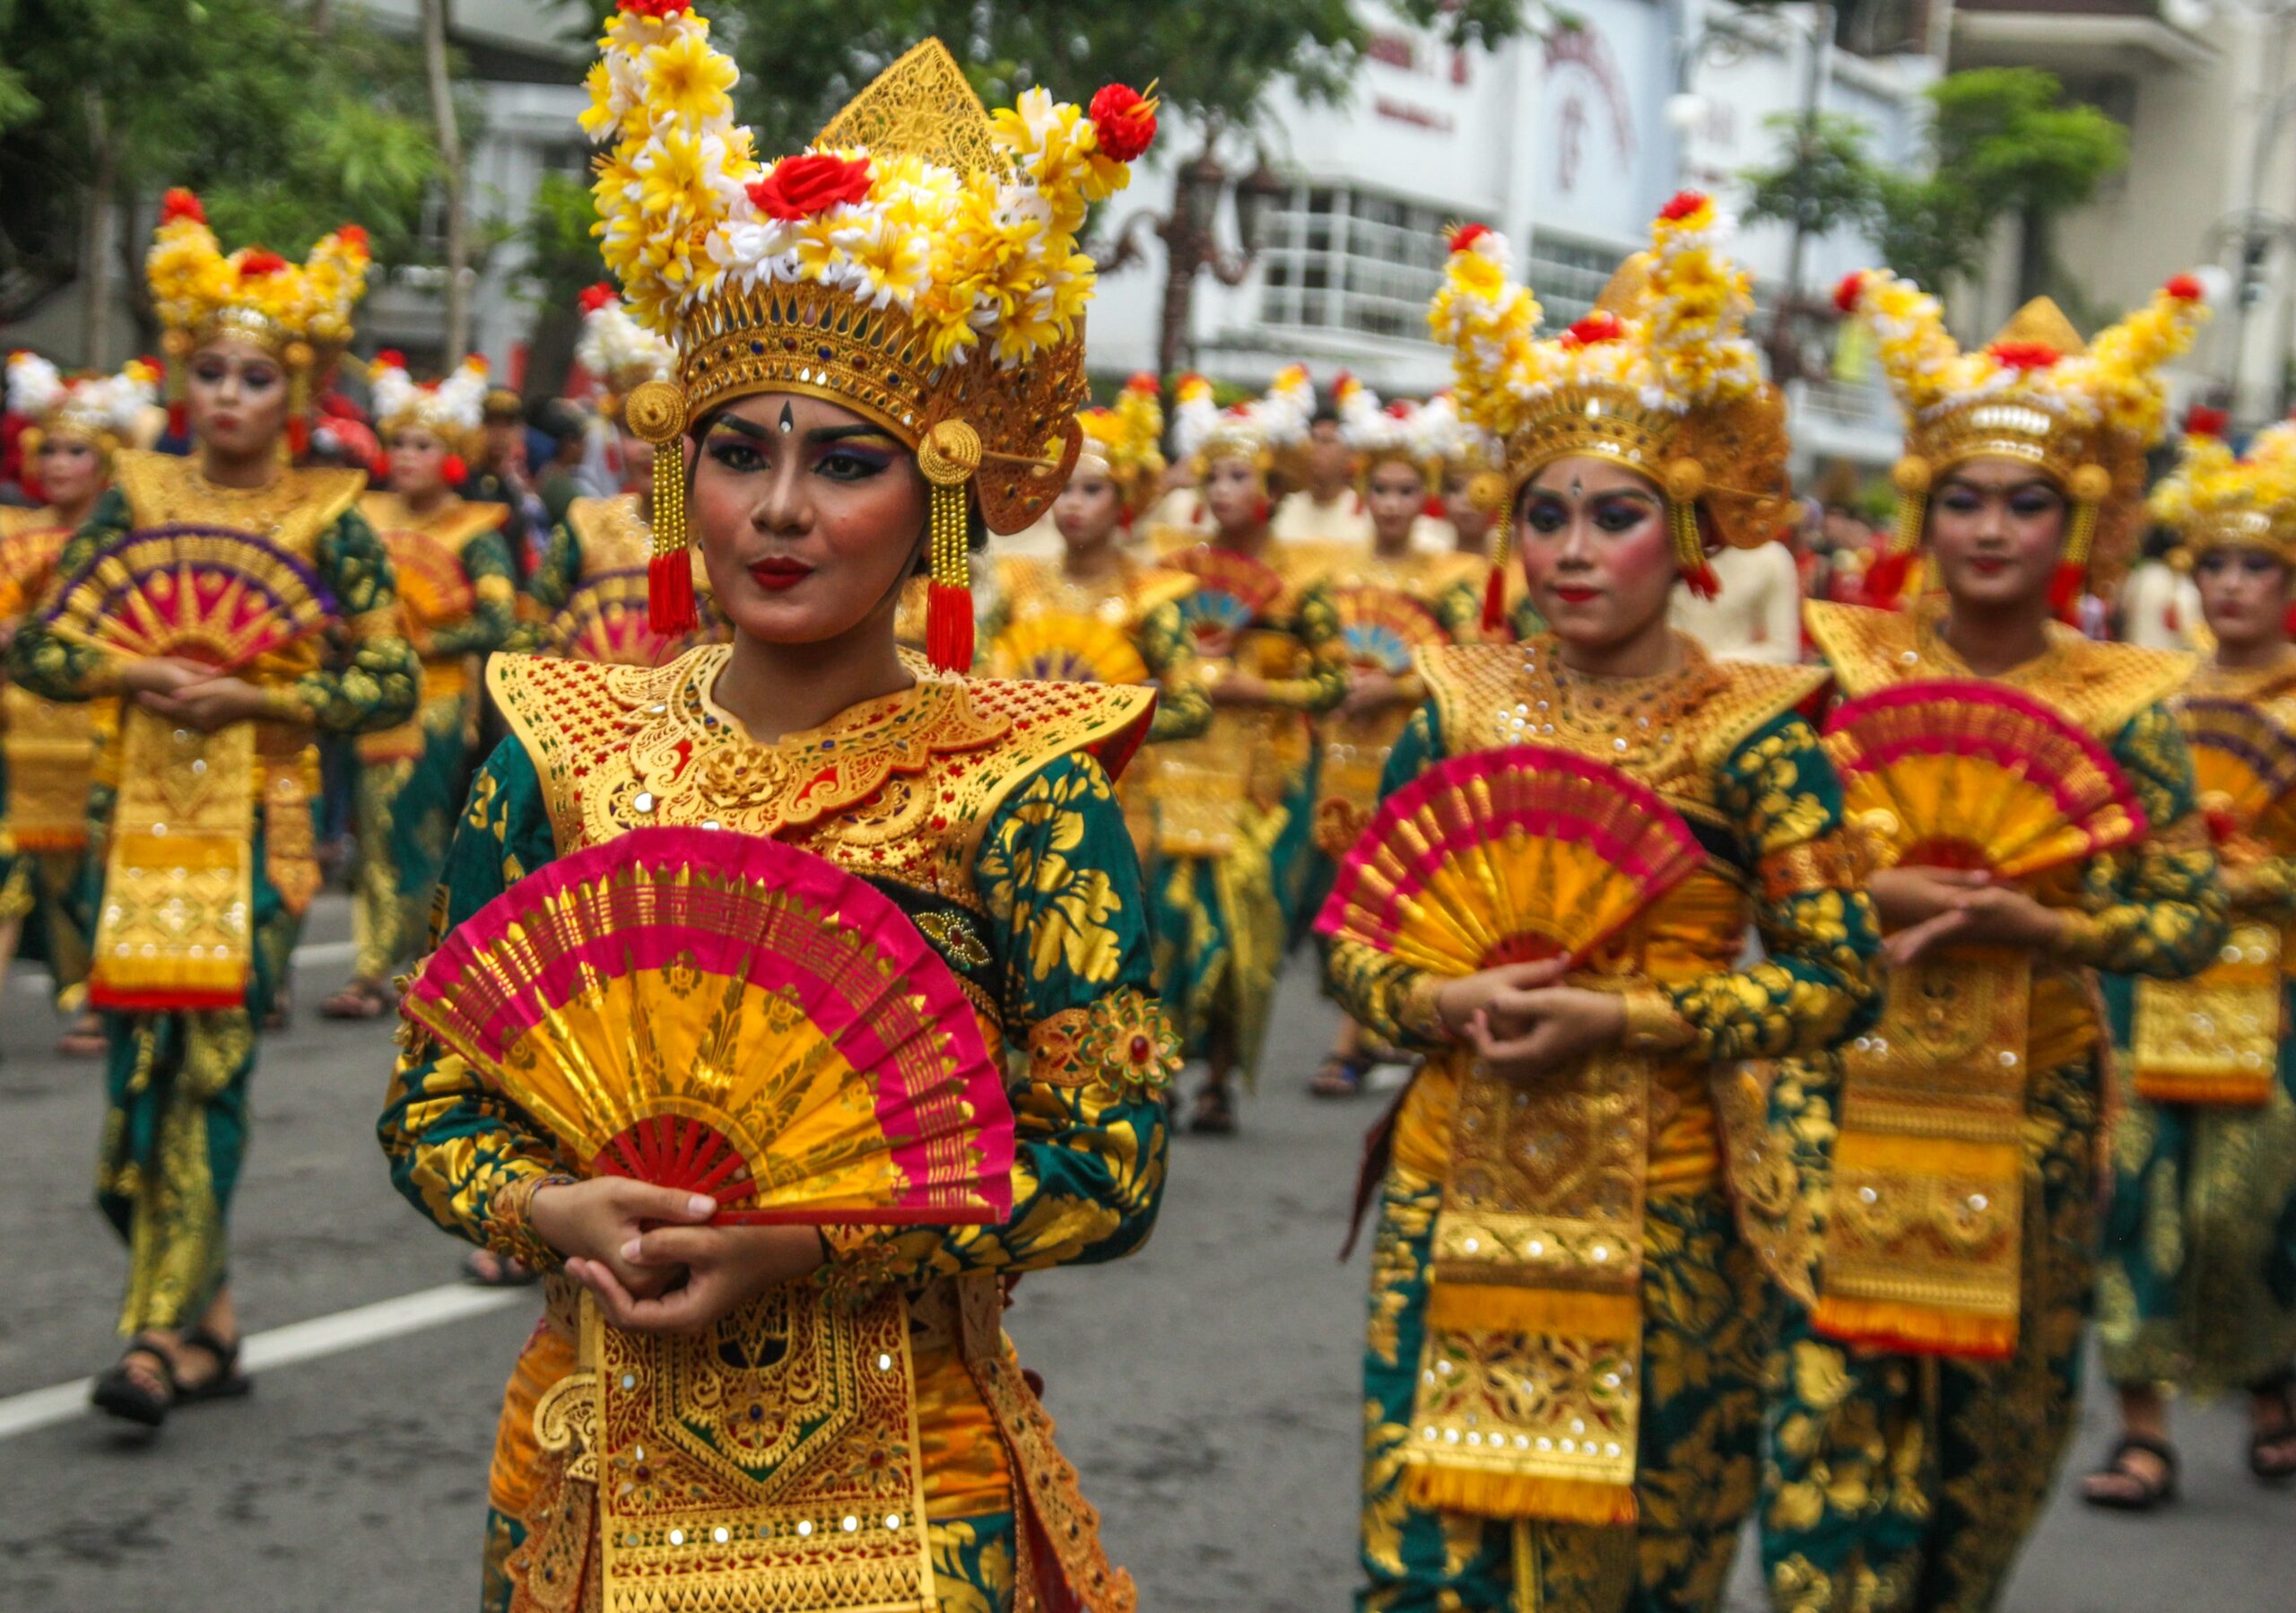 Traditionnal Indonesian women